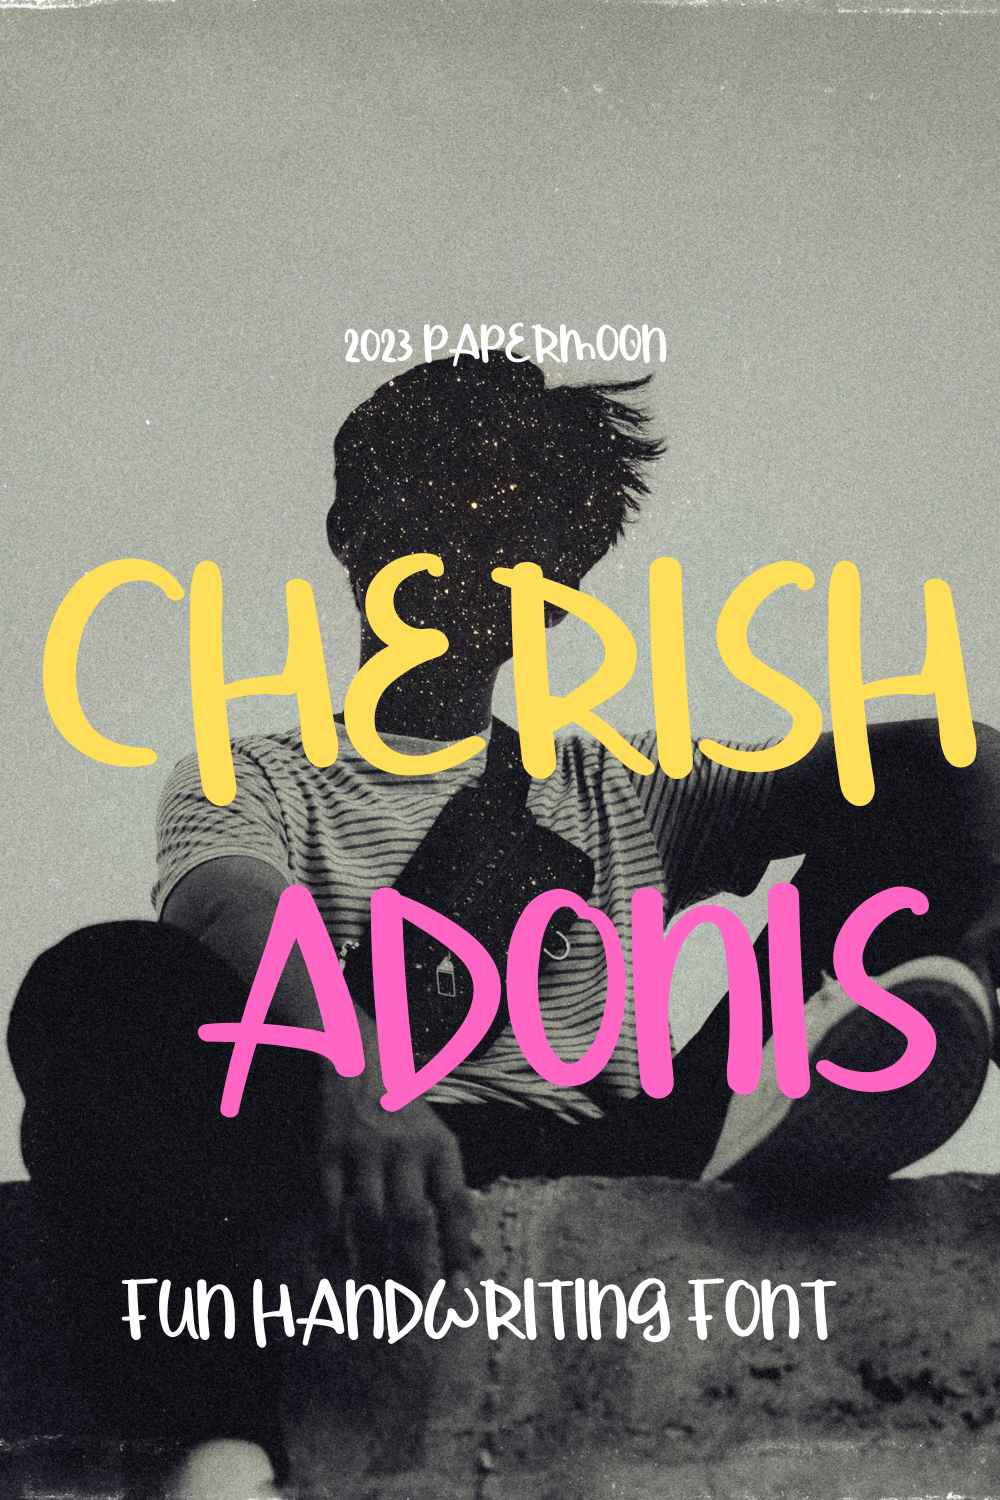 Cherish Adonis: Fun Handwriting Font pinterest preview image.